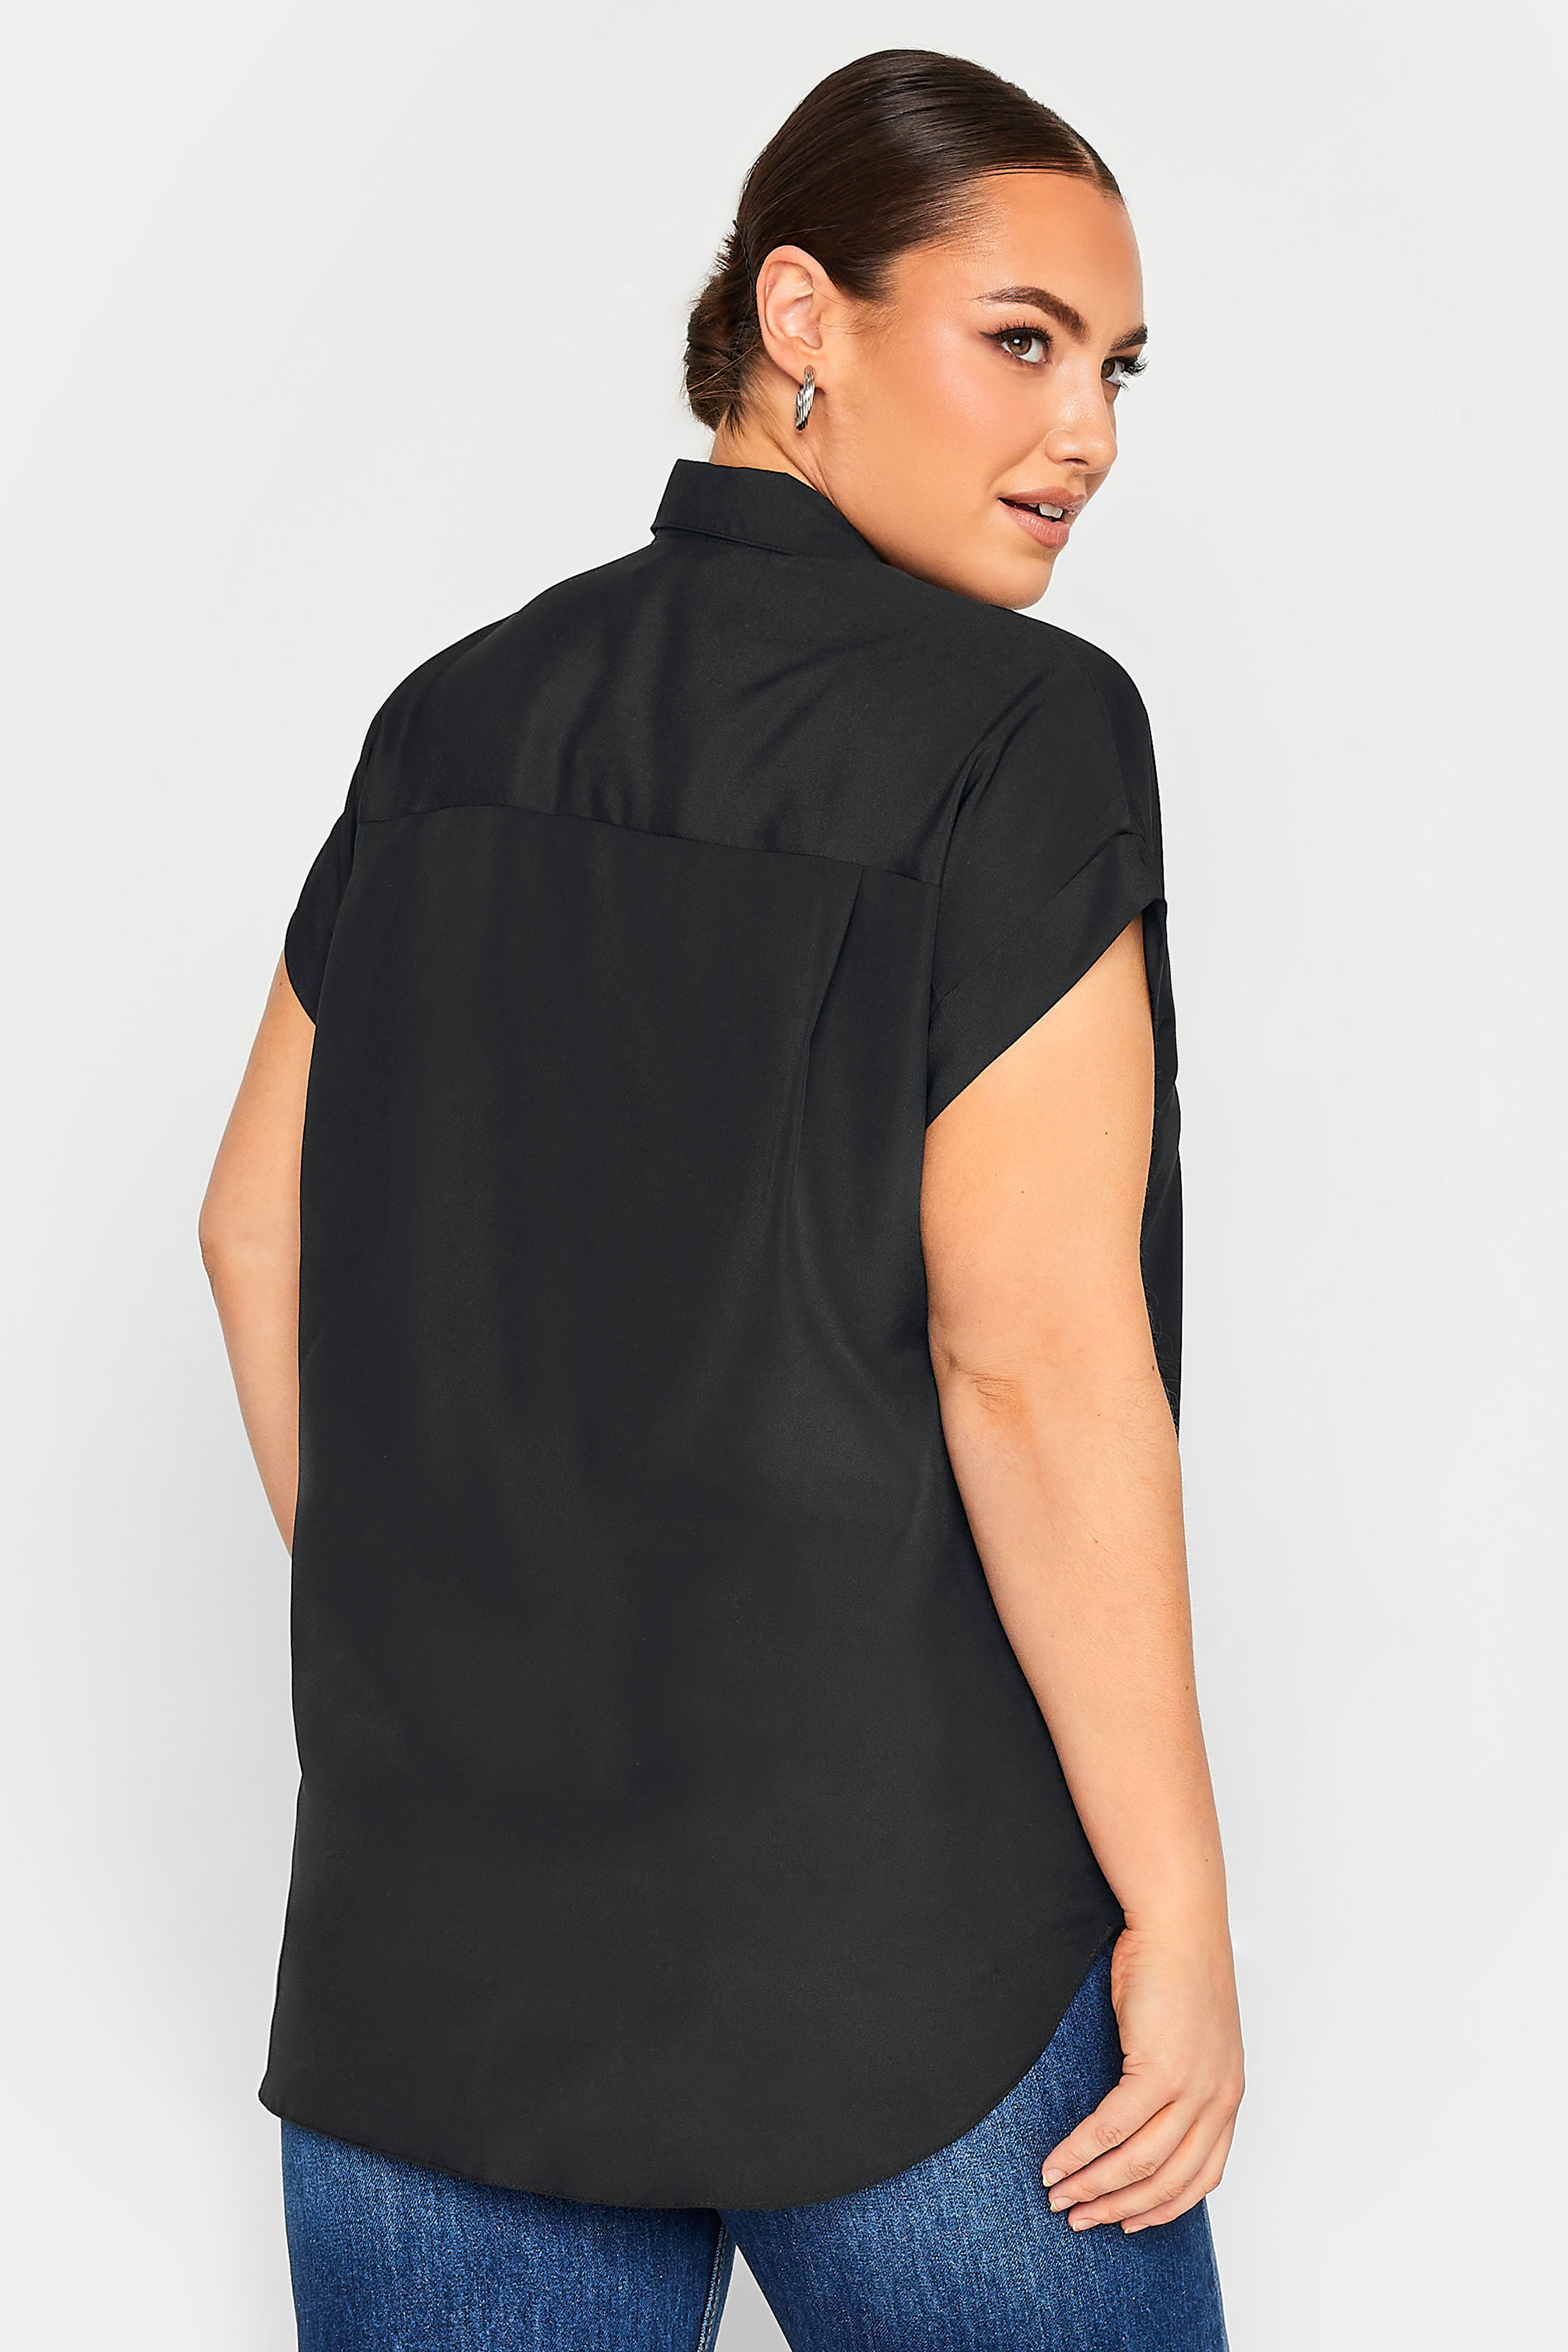 YOURS Plus Size Black Short Sleeve Shirt | Yours Clothing 3